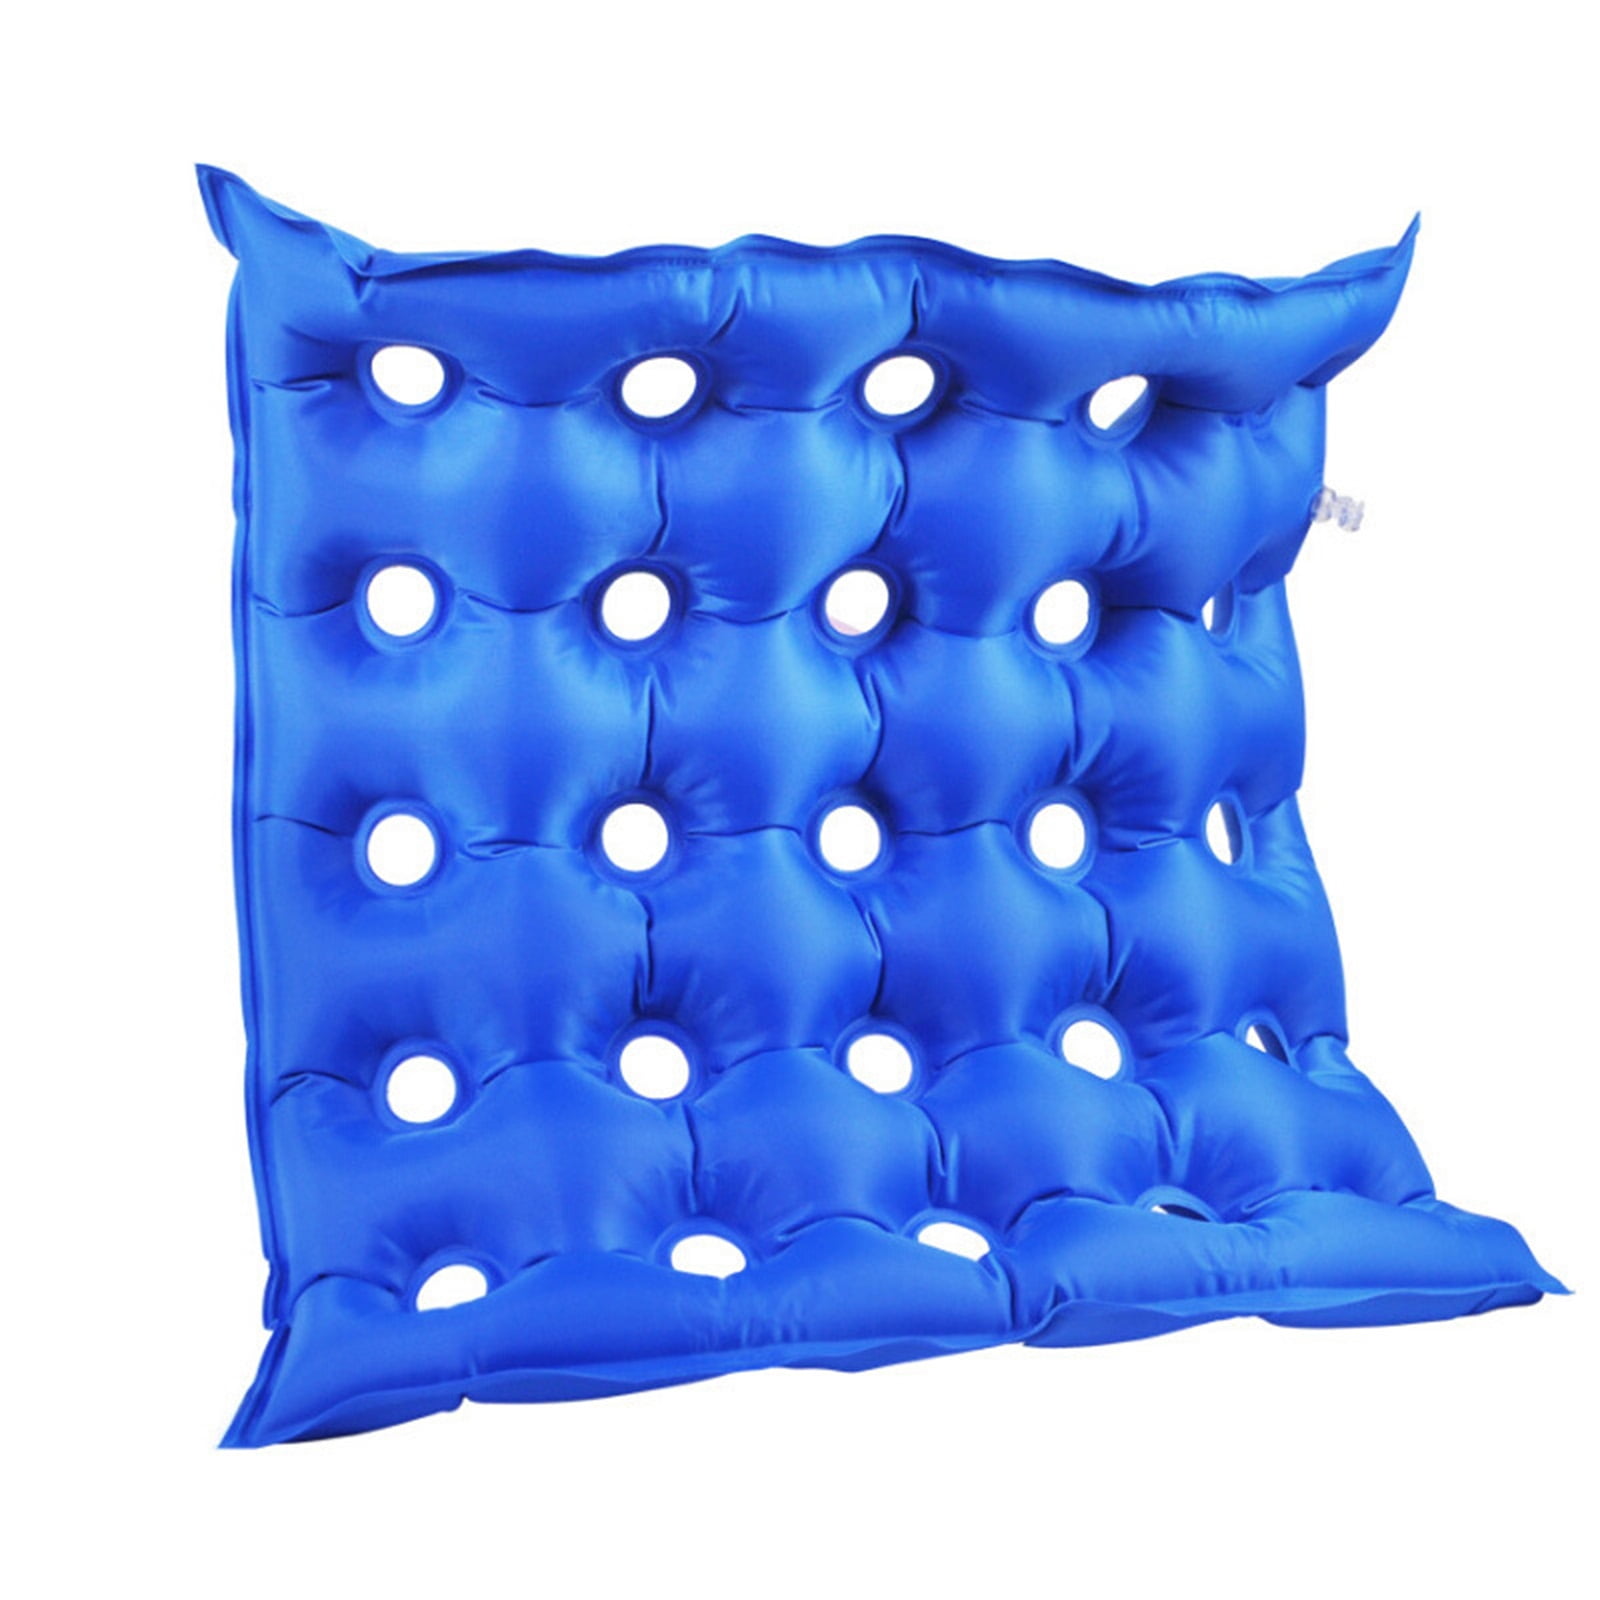 Foldable Air Inflatable Cushion Seat Chair Wheelchair Pillow Travel Pillow New 